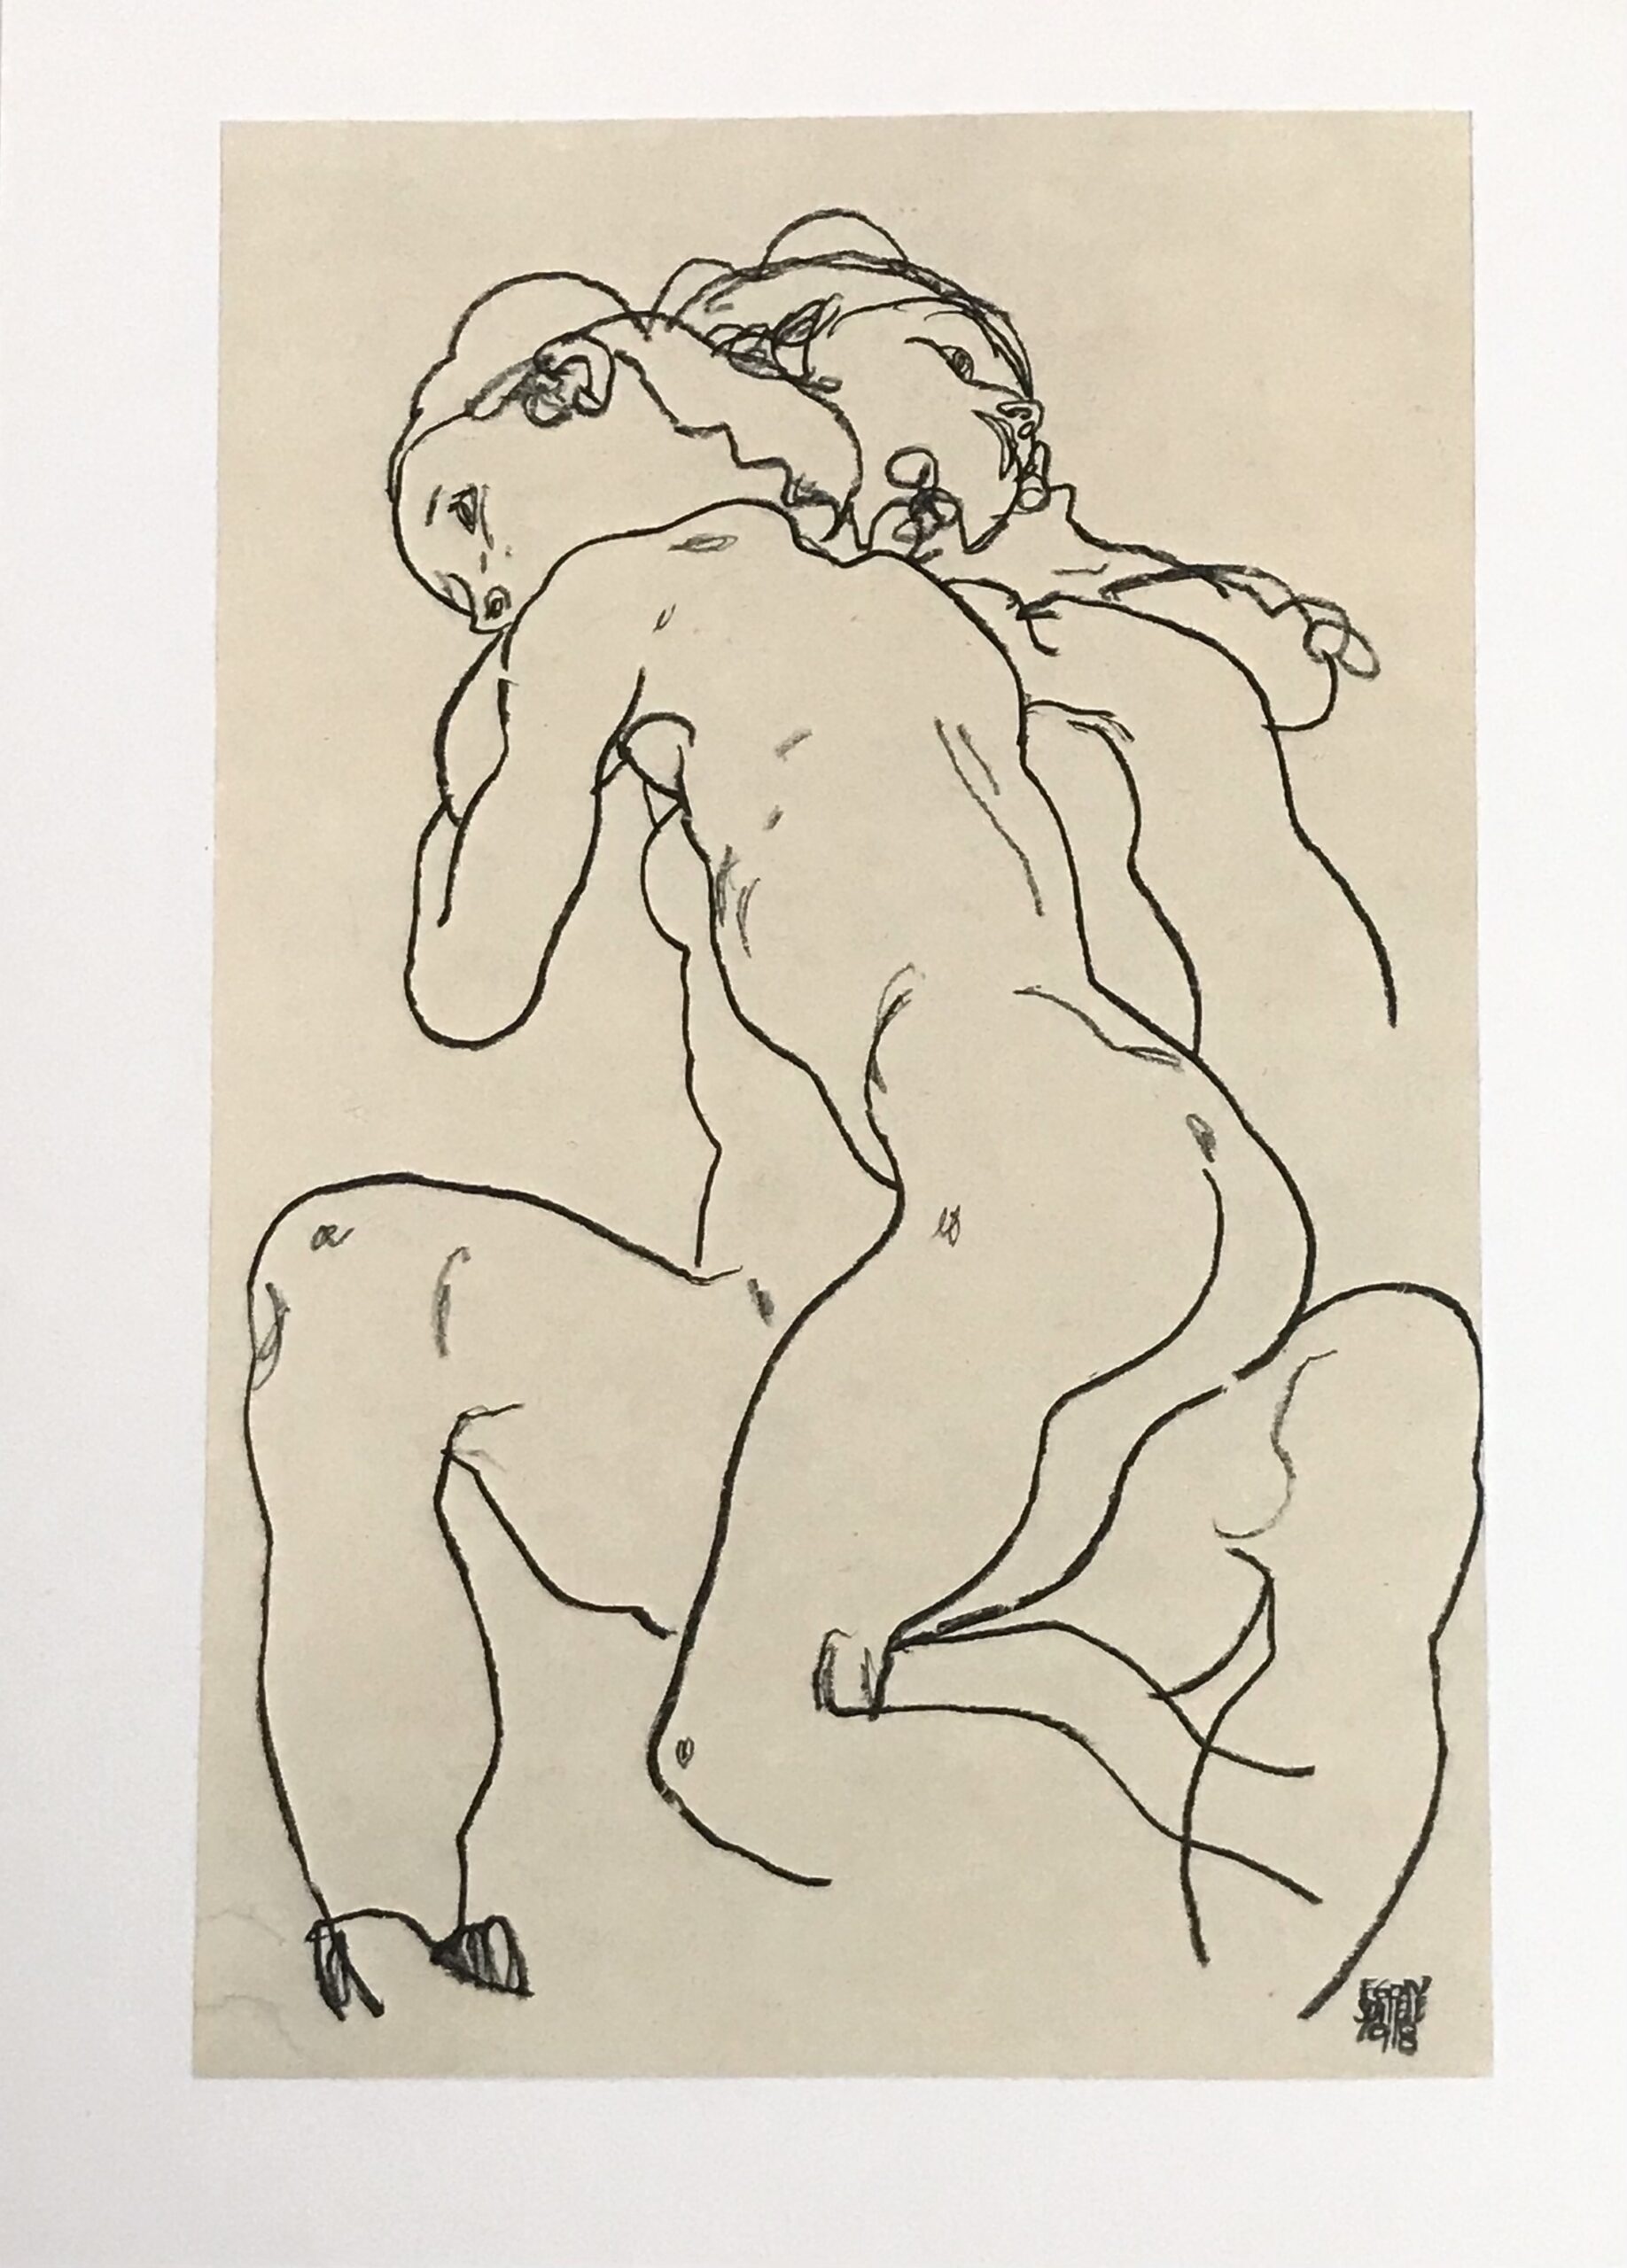 1981 Egon Schiele 40 Erotic Drawing Two Girls Embracing